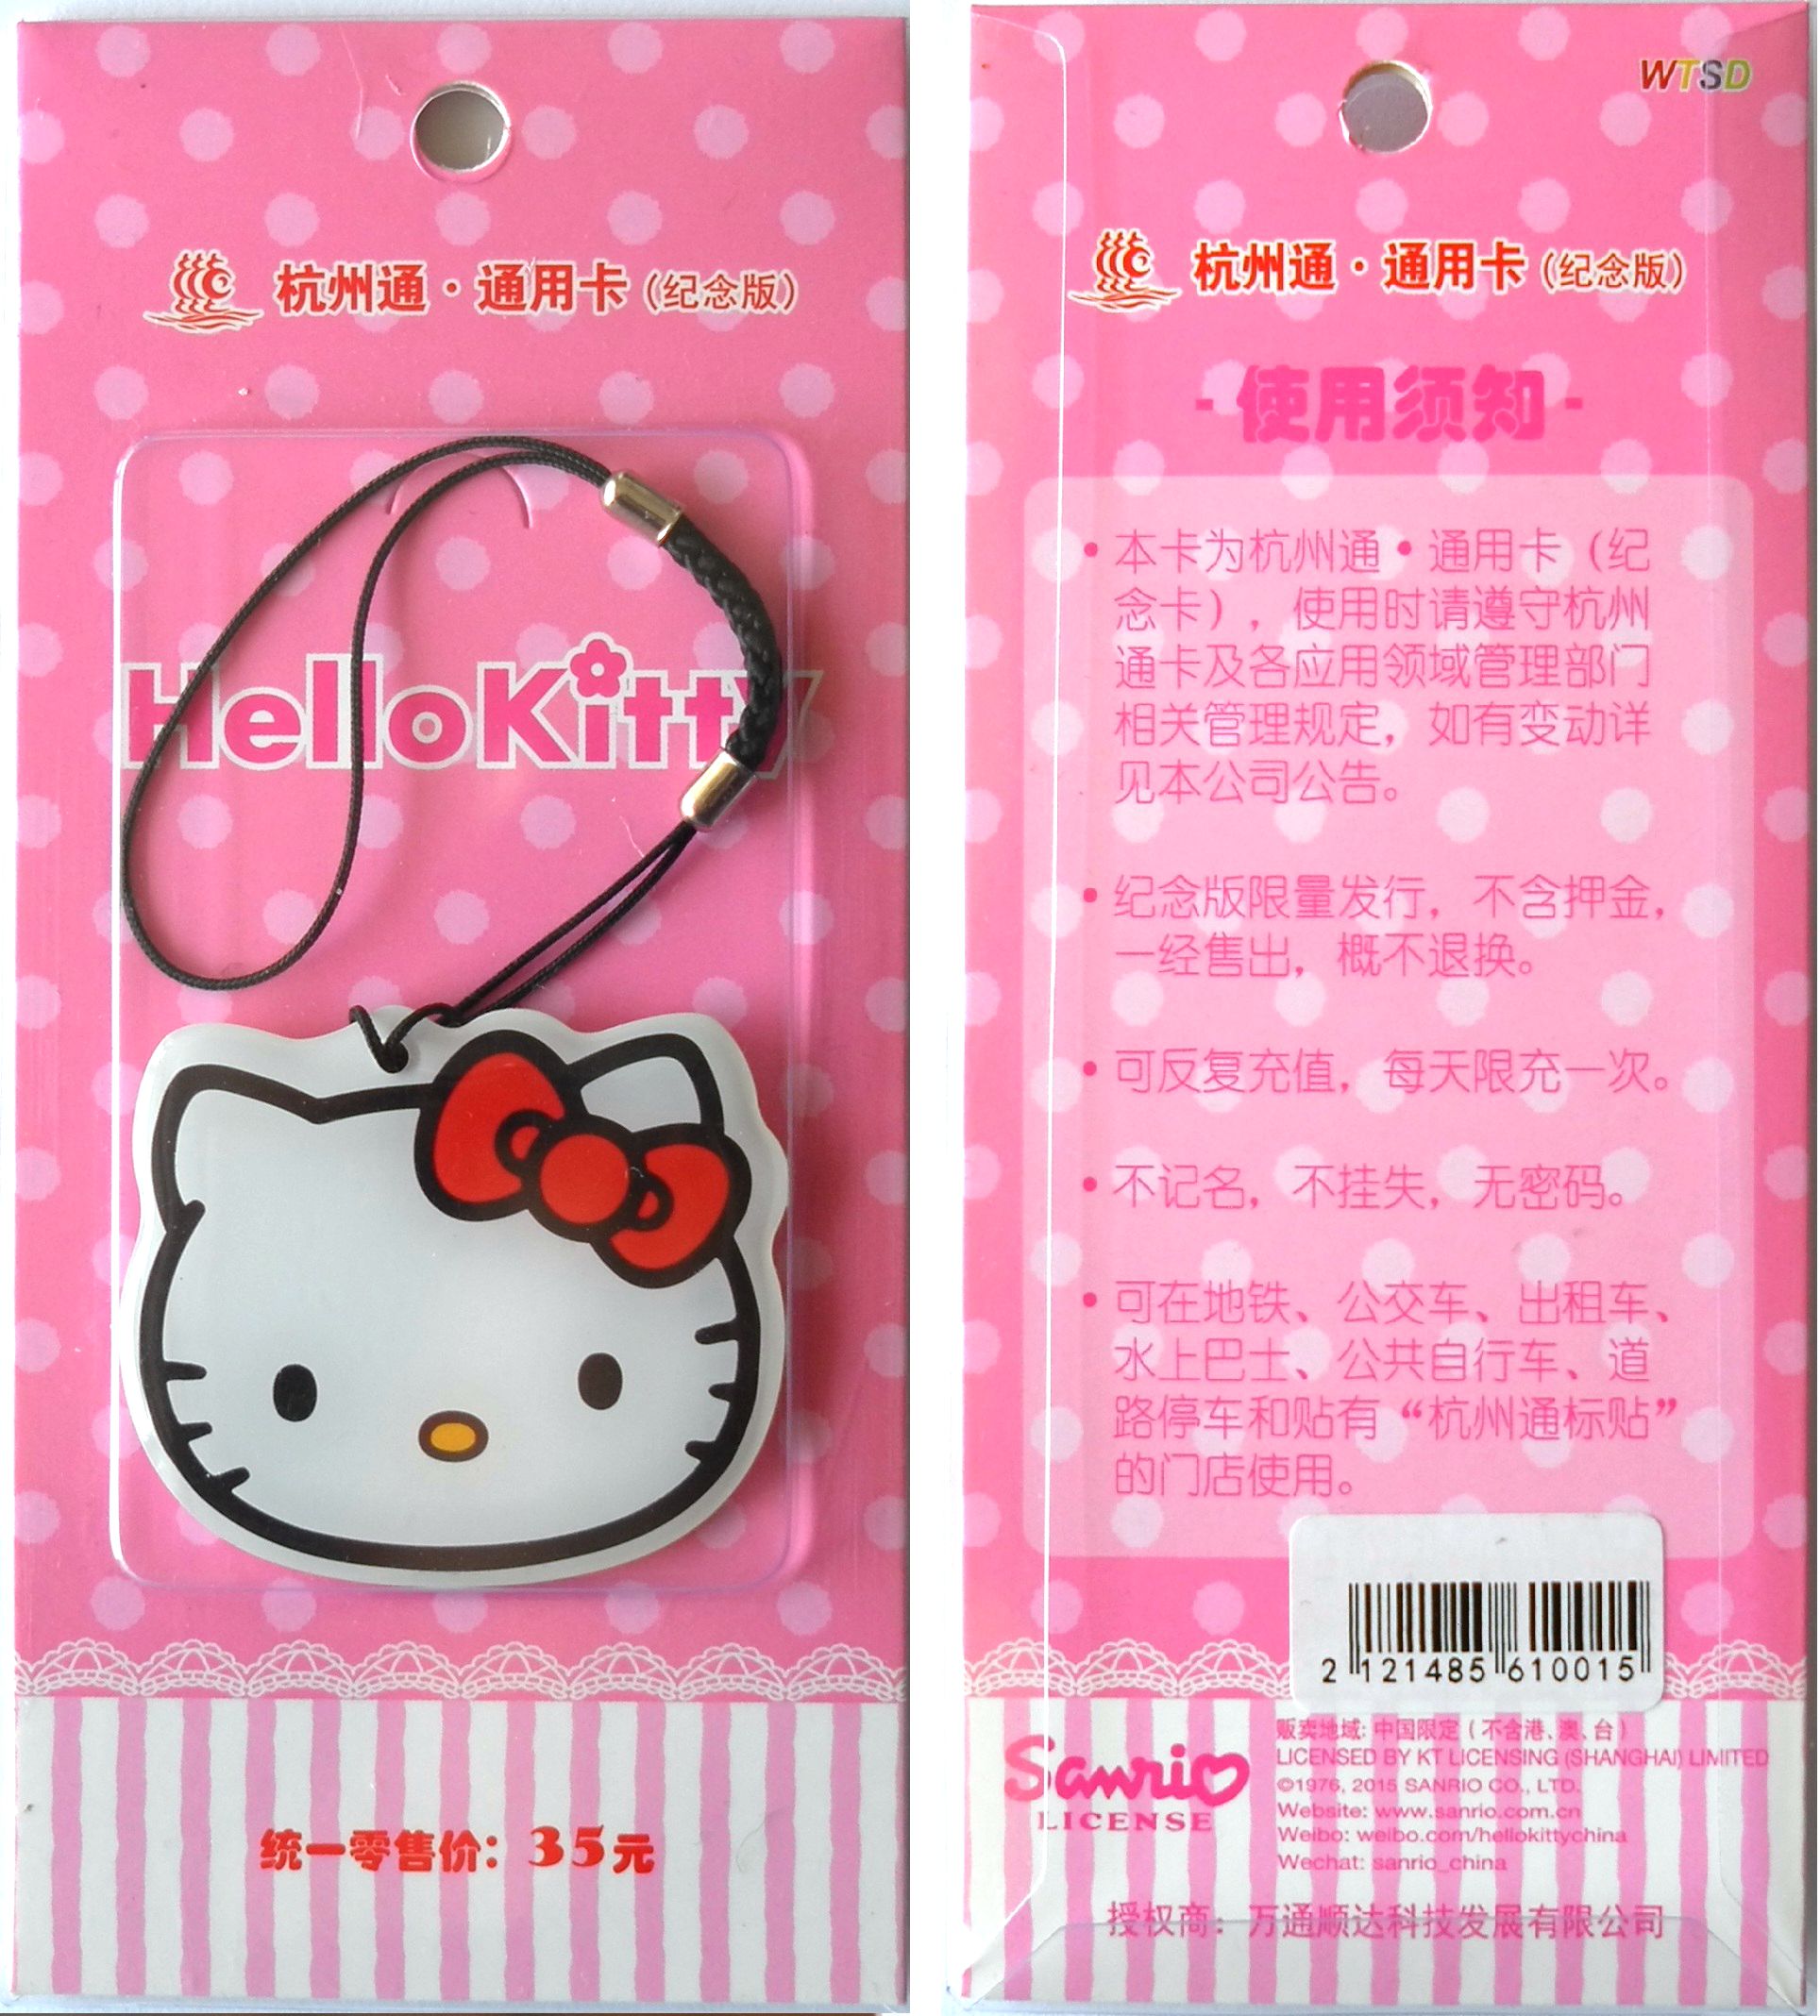 T5214, China Hangzhou Commemorative Travel Metro Card Small-Size, 2015 "Hello Kitty" - Click Image to Close